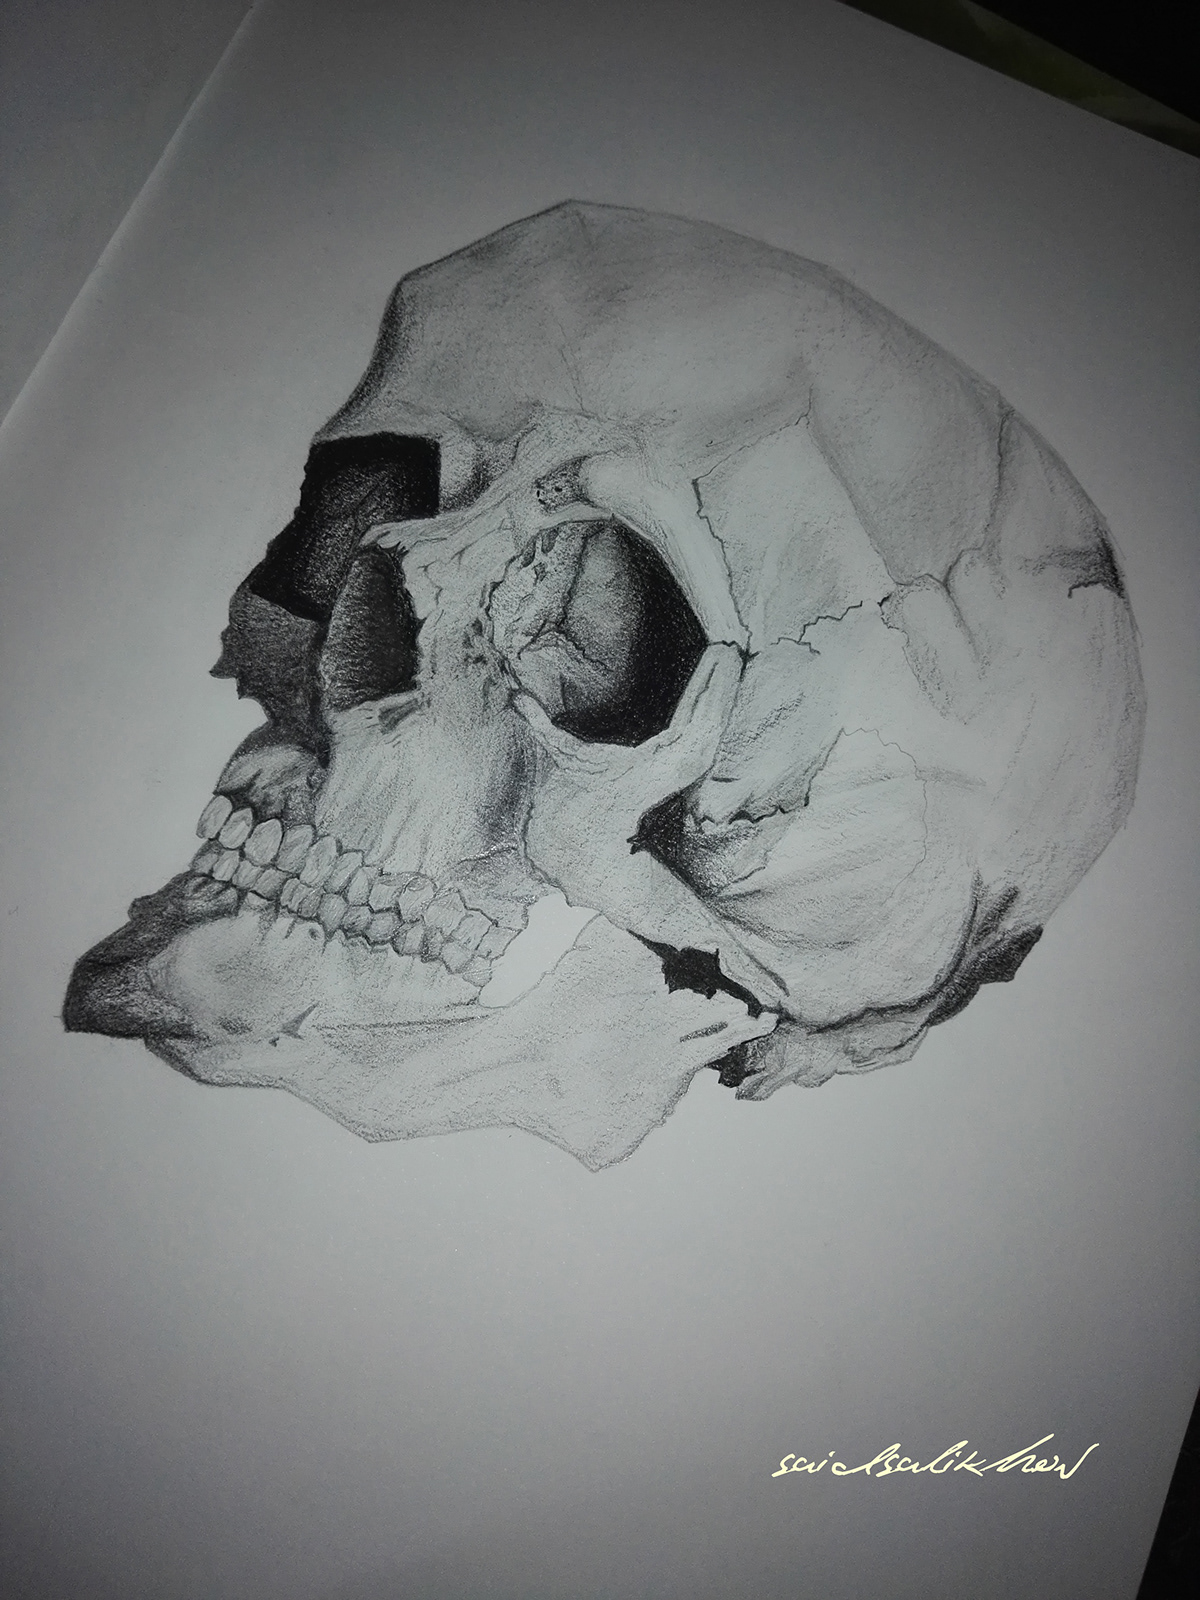 A pencil drawing of a skull